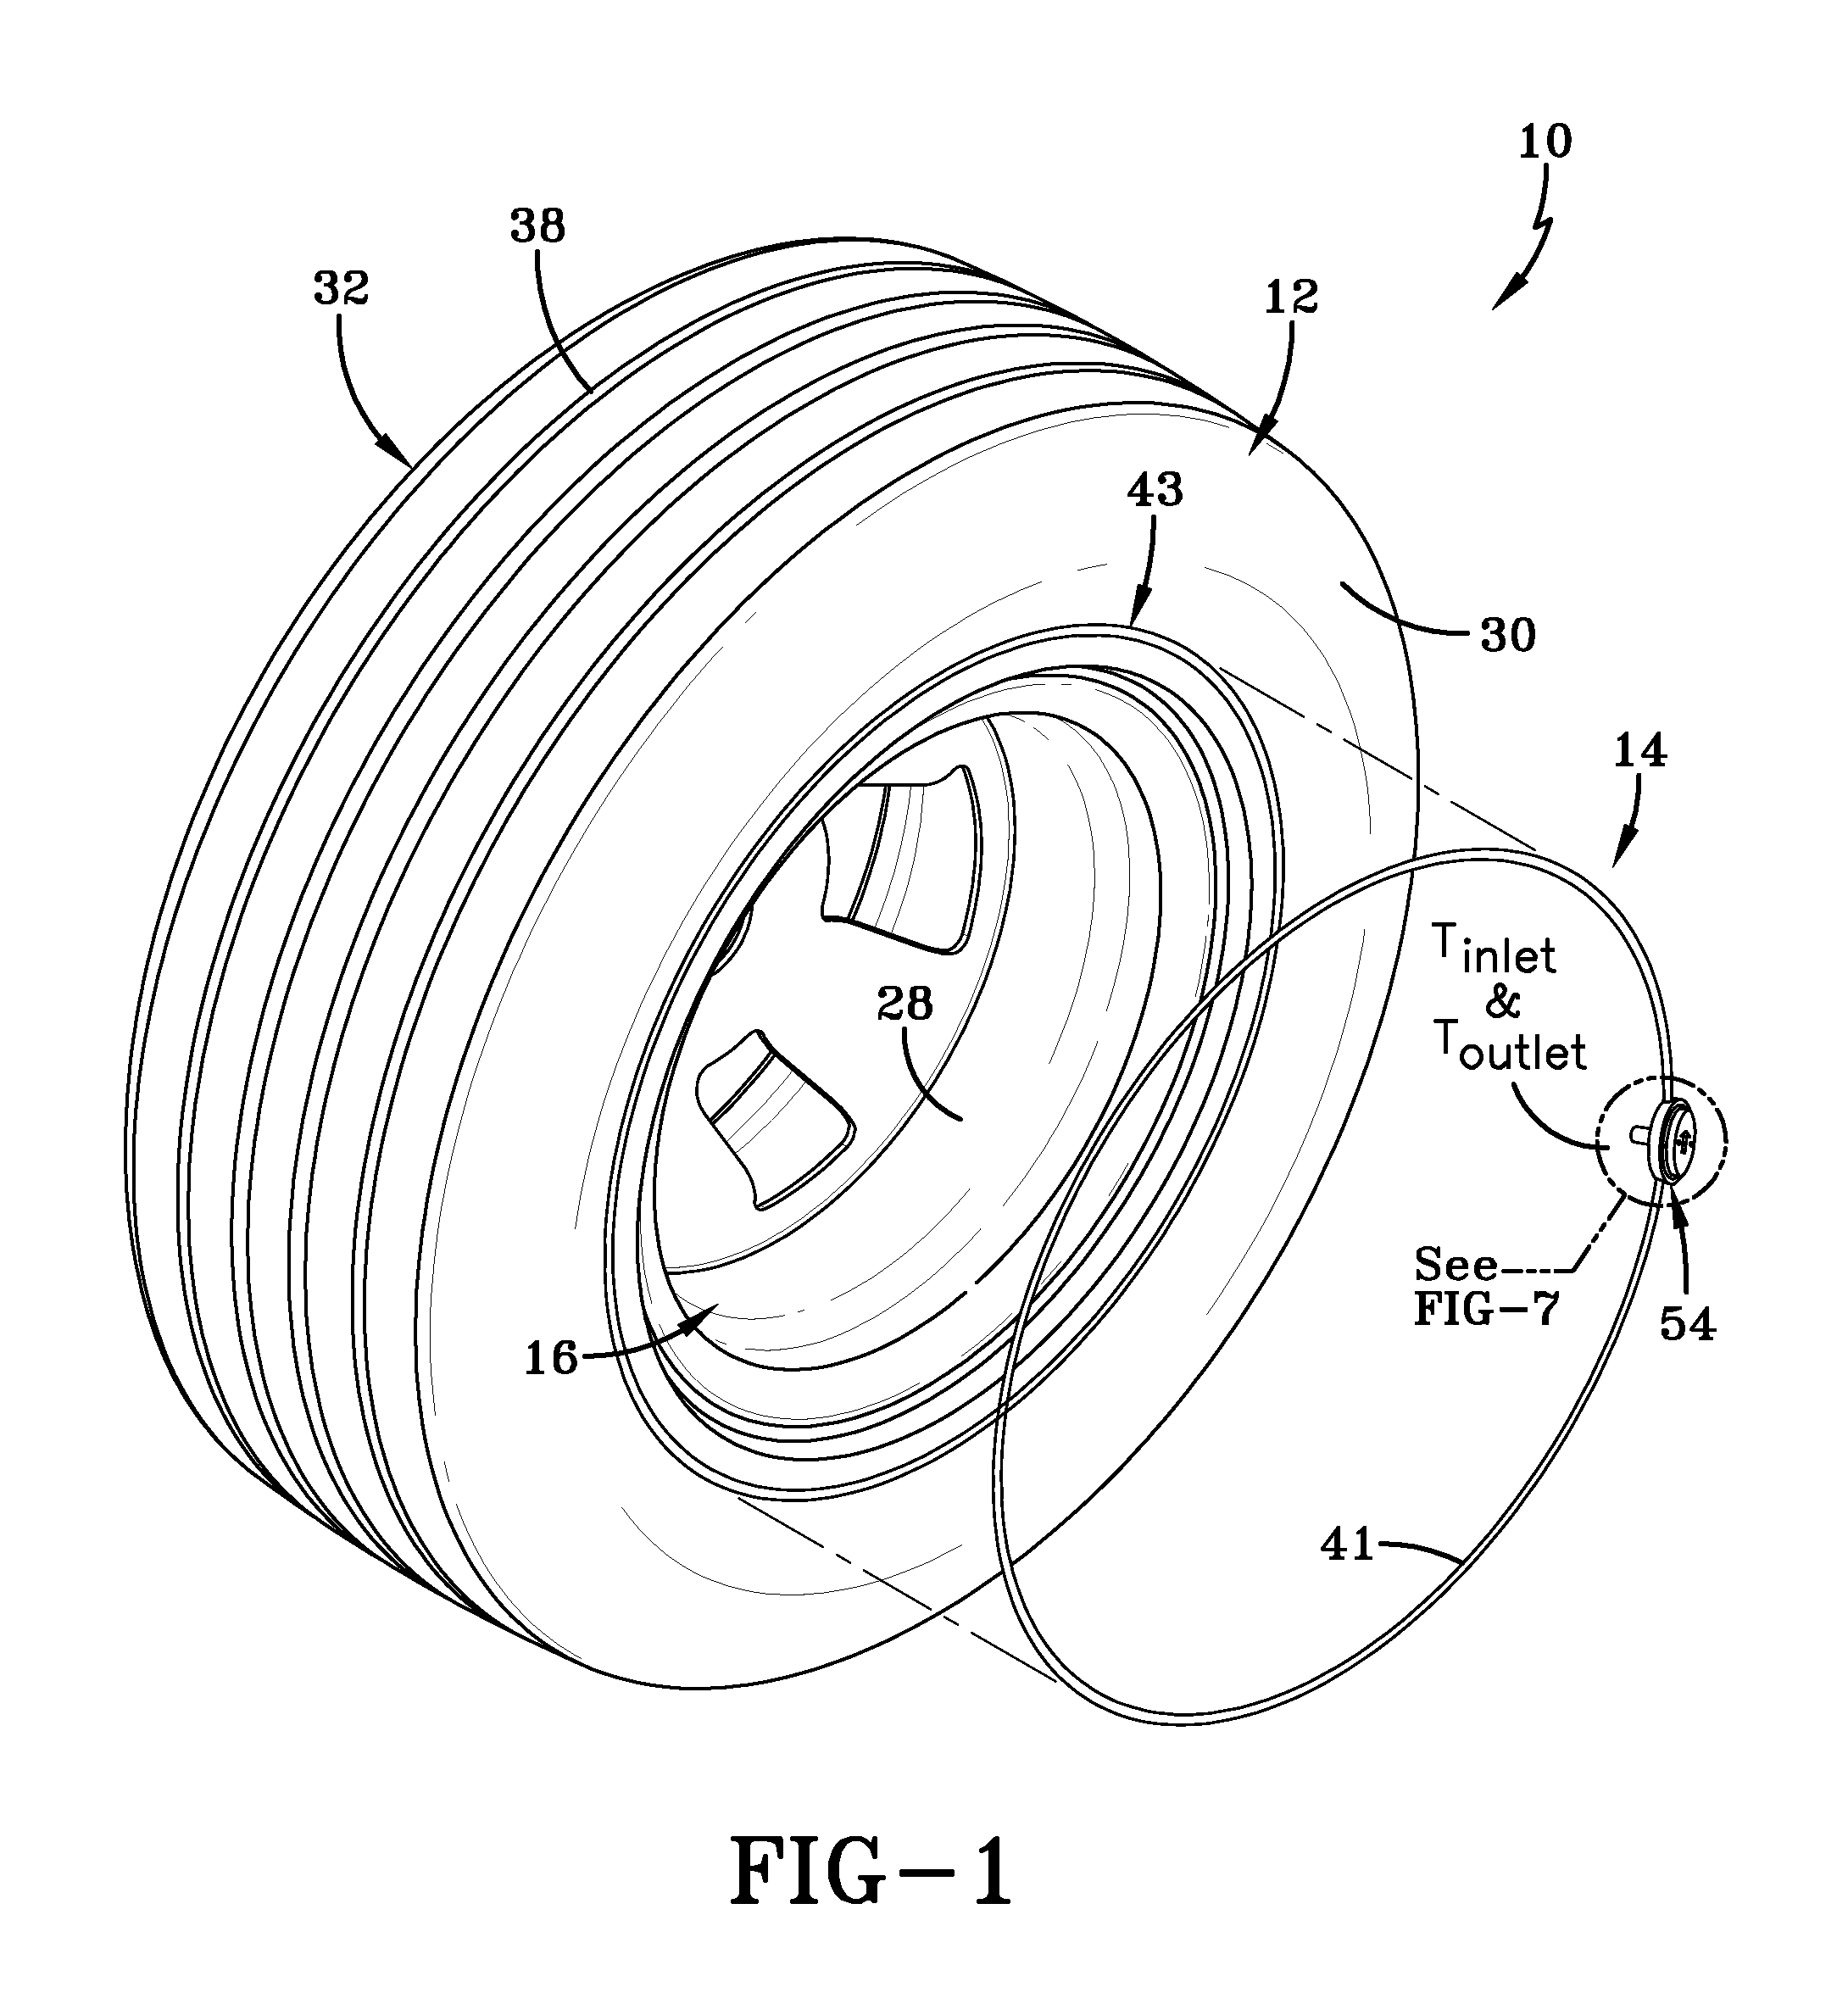 Self-inflating tire and pressure regulator